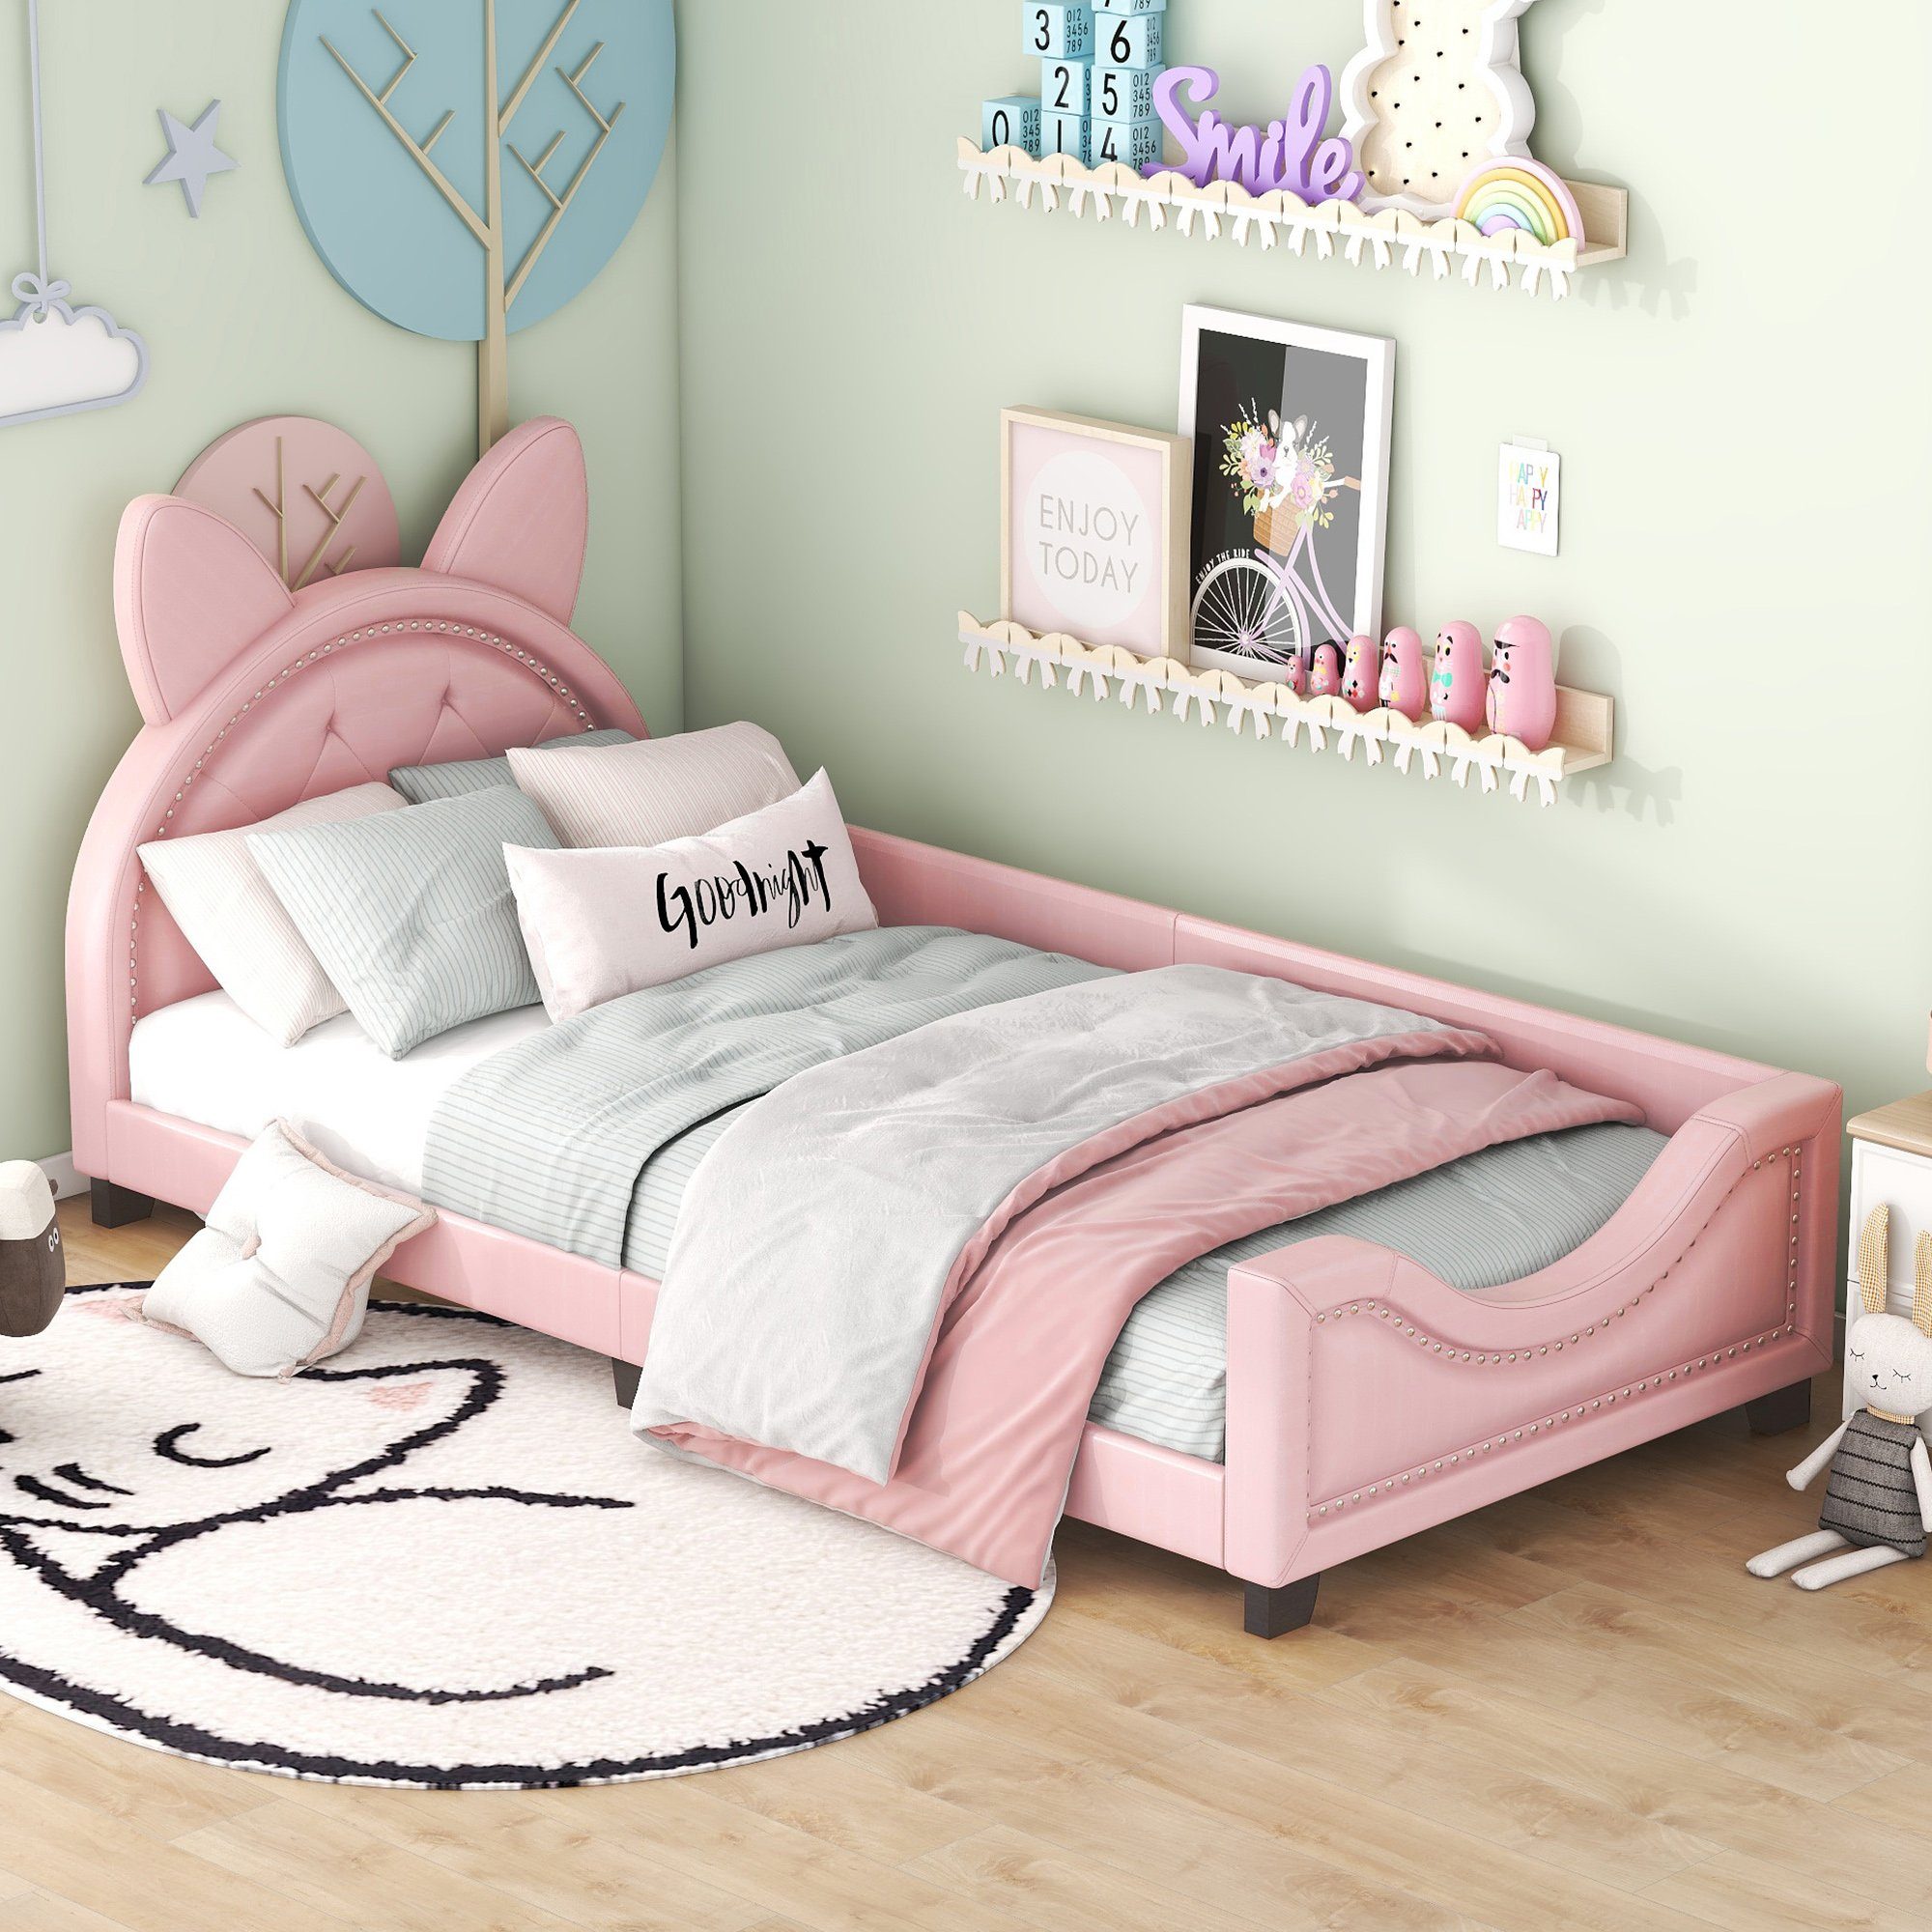 Flieks Polsterbett, Kinderbett Einzelbett mit Karton-Ohren Kunstleder 90x200cm rosa